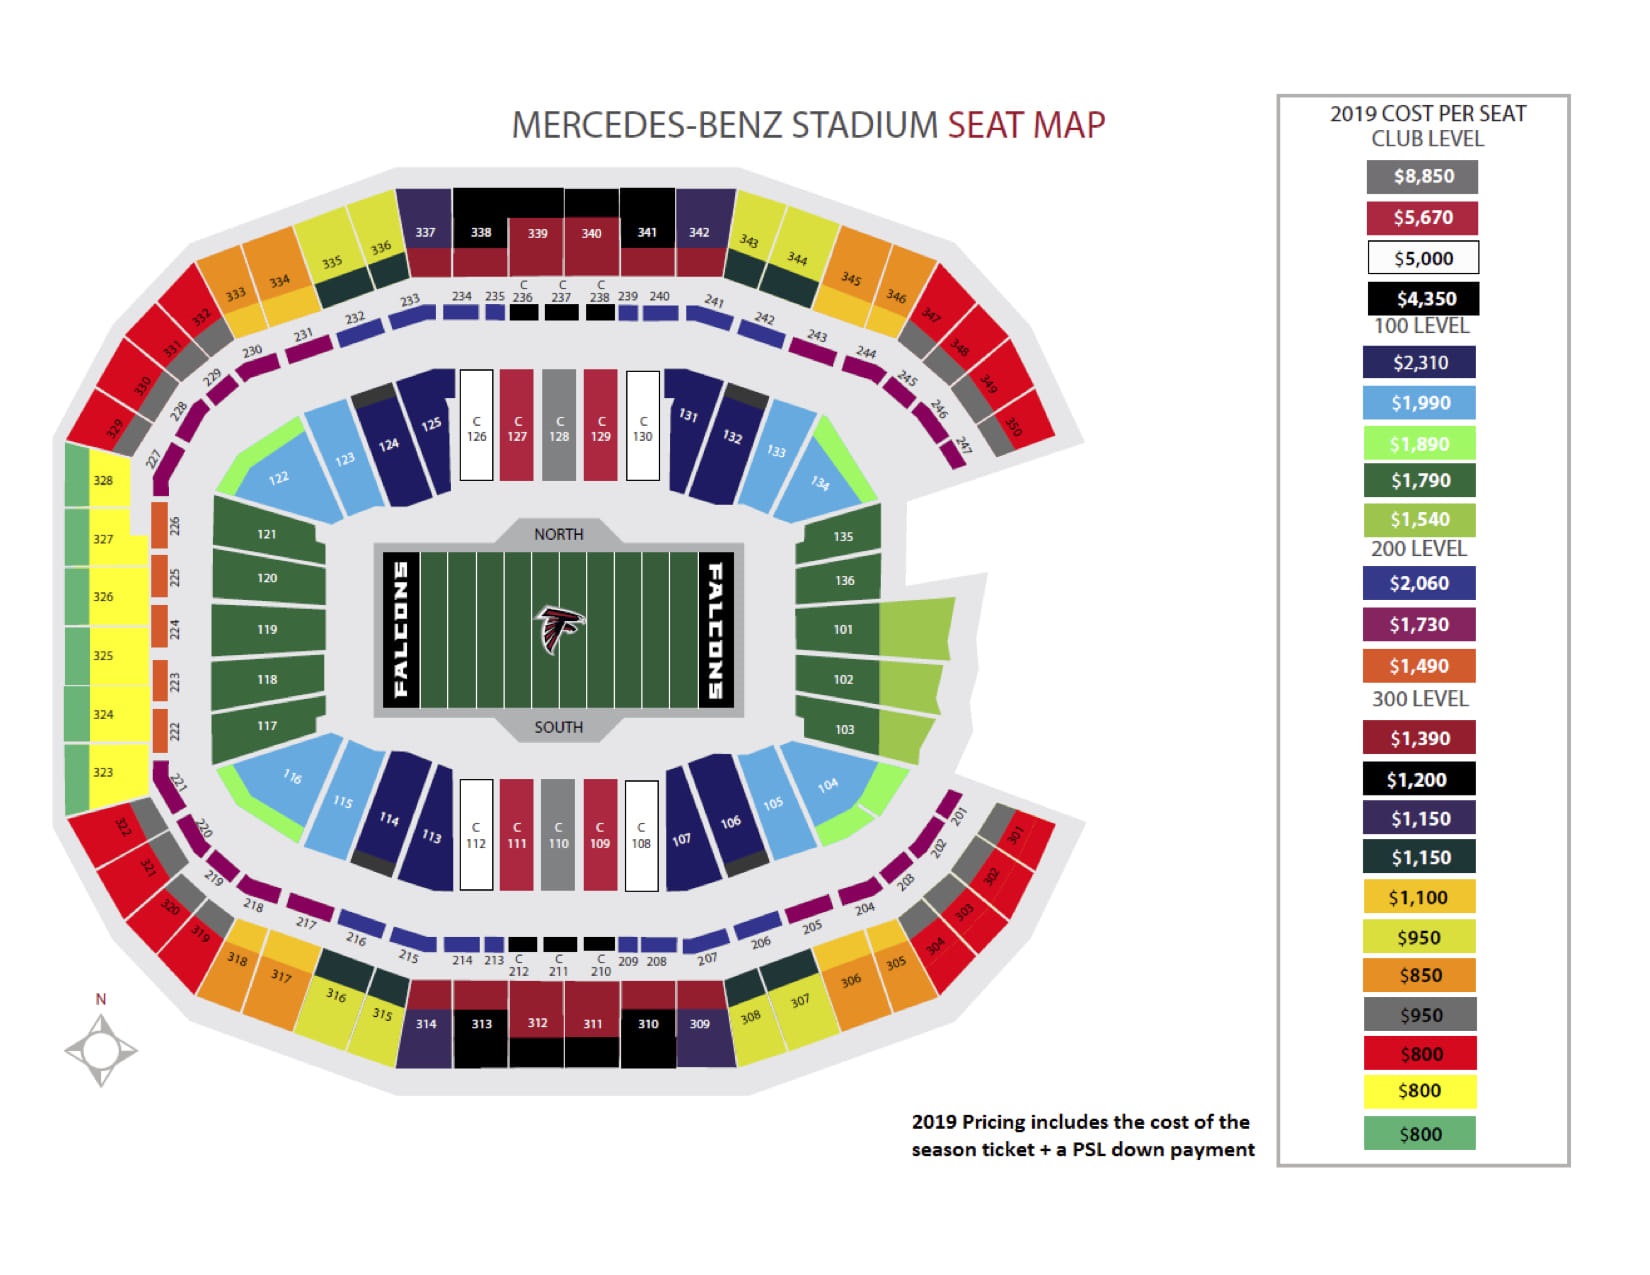 Mercedes-Benz Stadium seats to be empty at Falcons vs. Seashawks